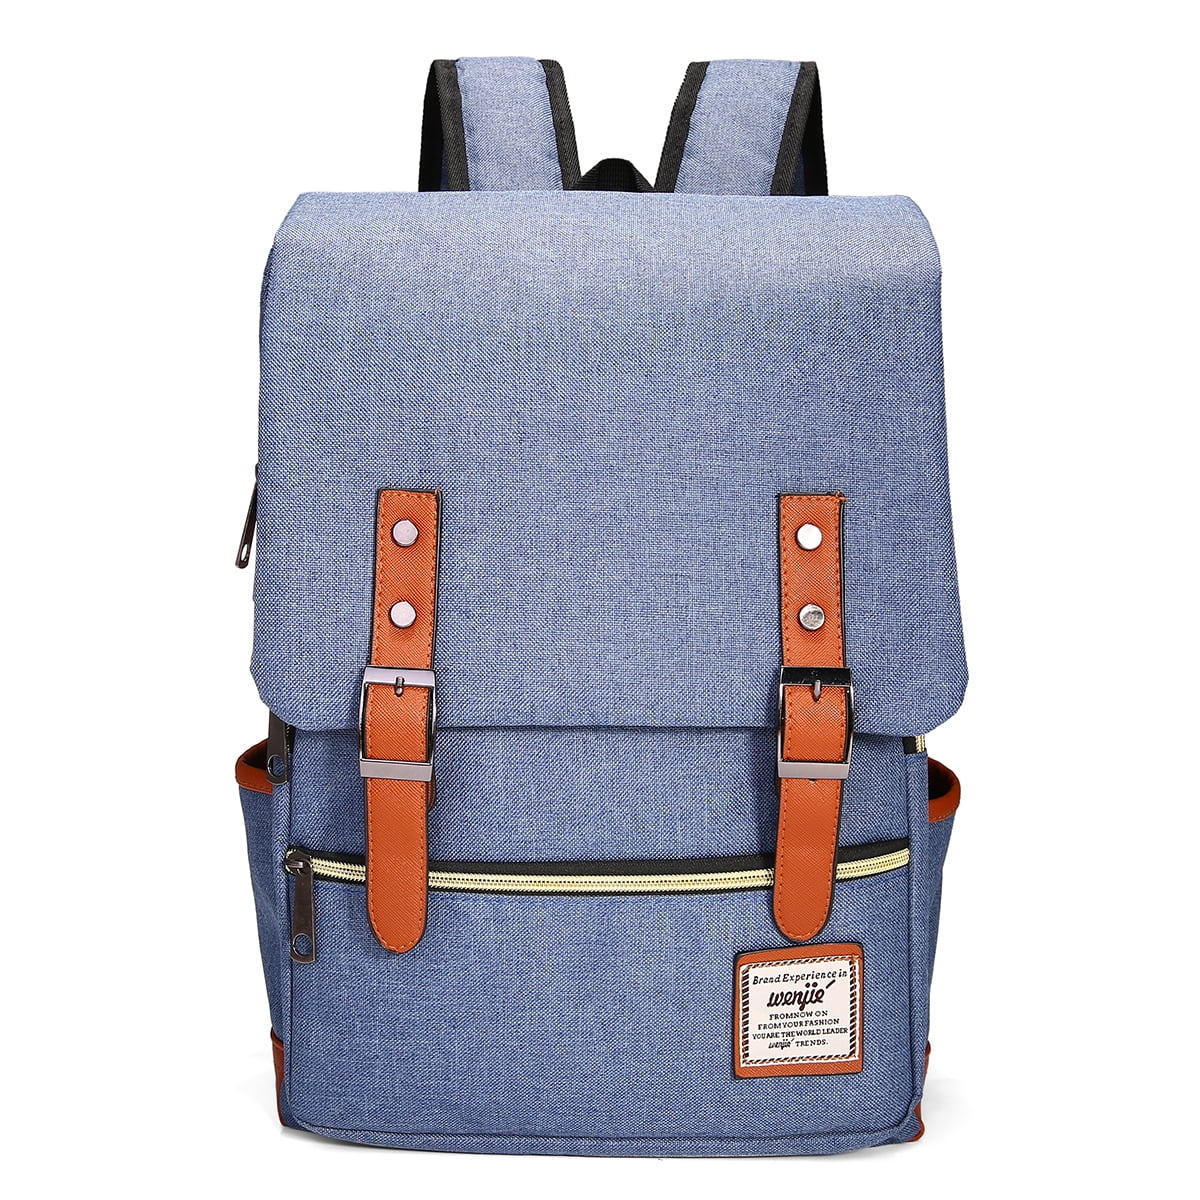 Heavy Duty Canvas Laptop Rucksack Backpack Satchel School Bag Blue/Yellow